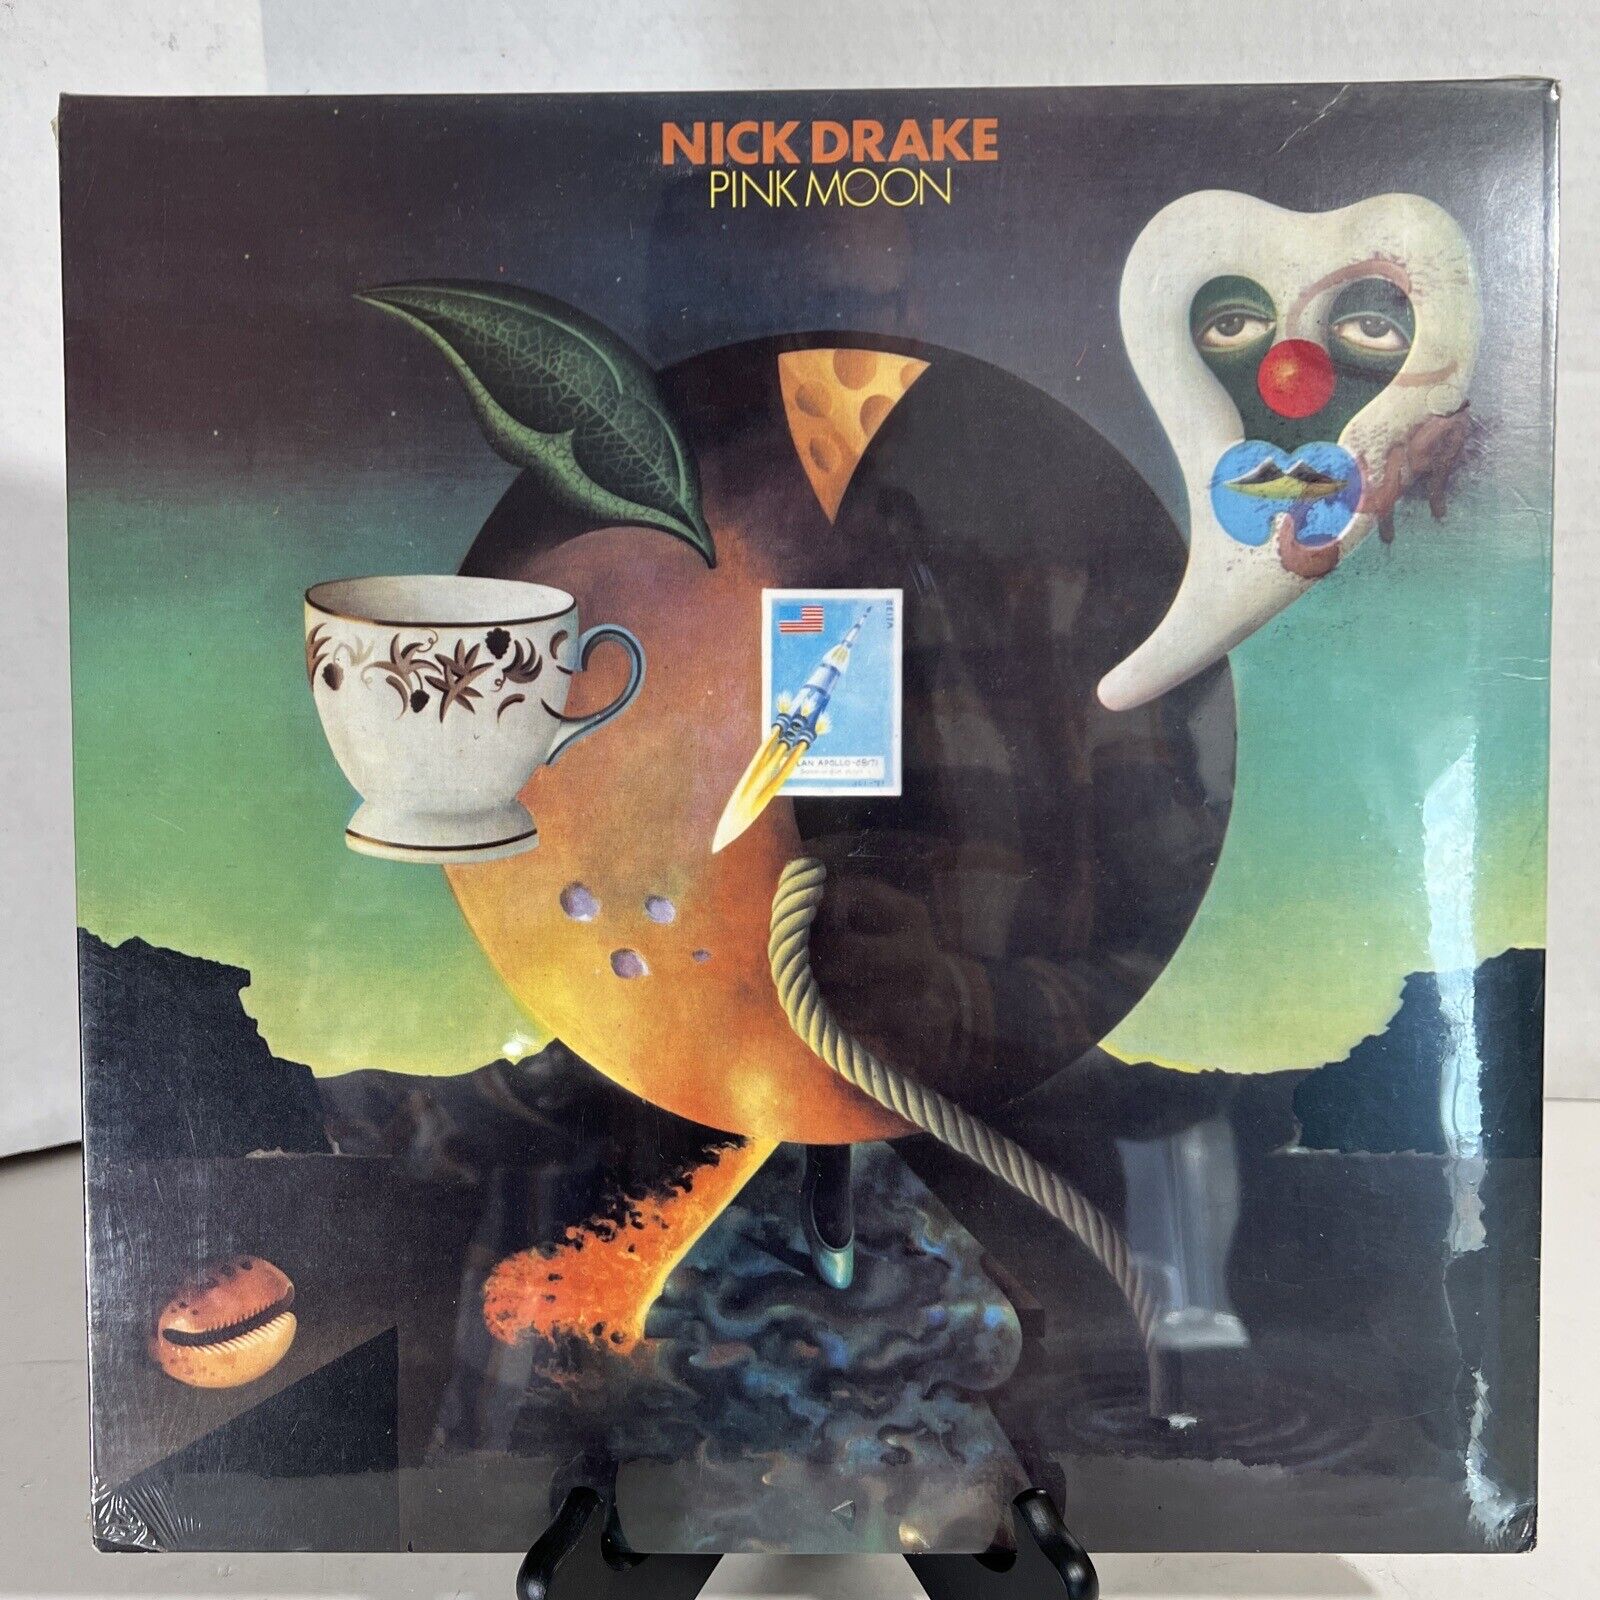 Nick Drake Vinyl LP "Pink Moon" Sealed! Repress Stereo Gatefold ILPS-9184 NOS